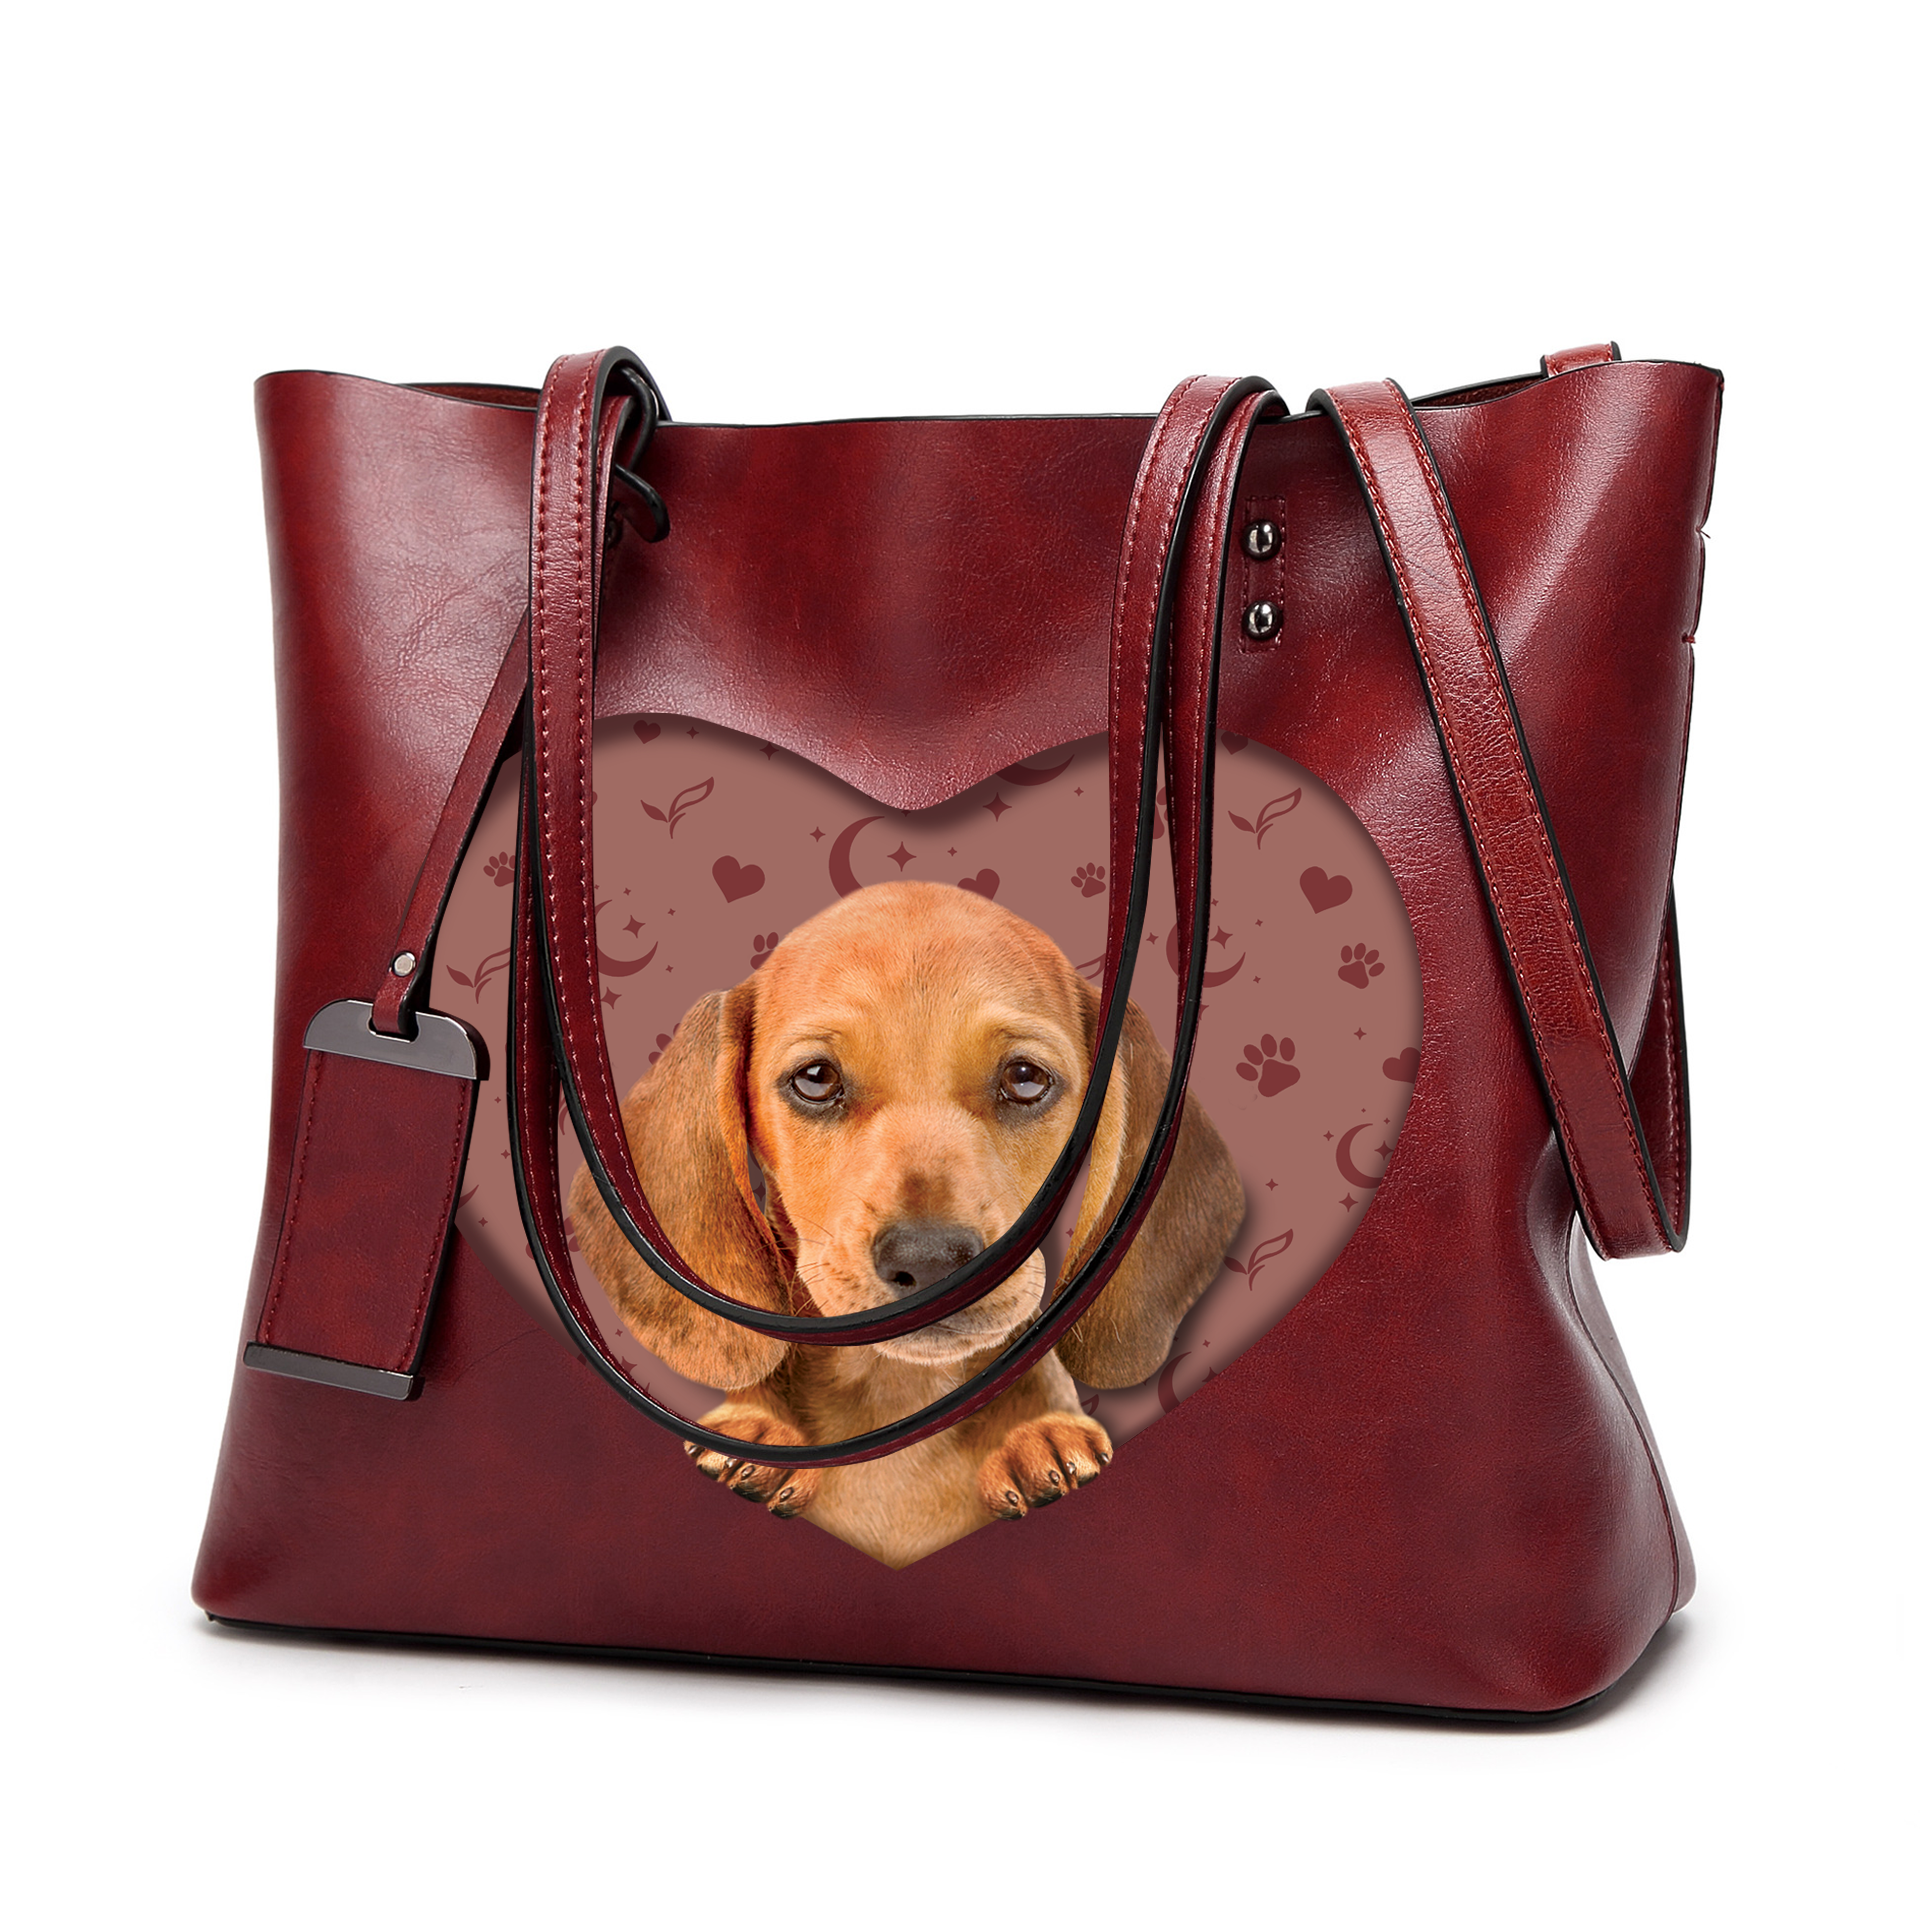 I Know I'm Cute - Dachshund Glamour Handbag V2 - 8